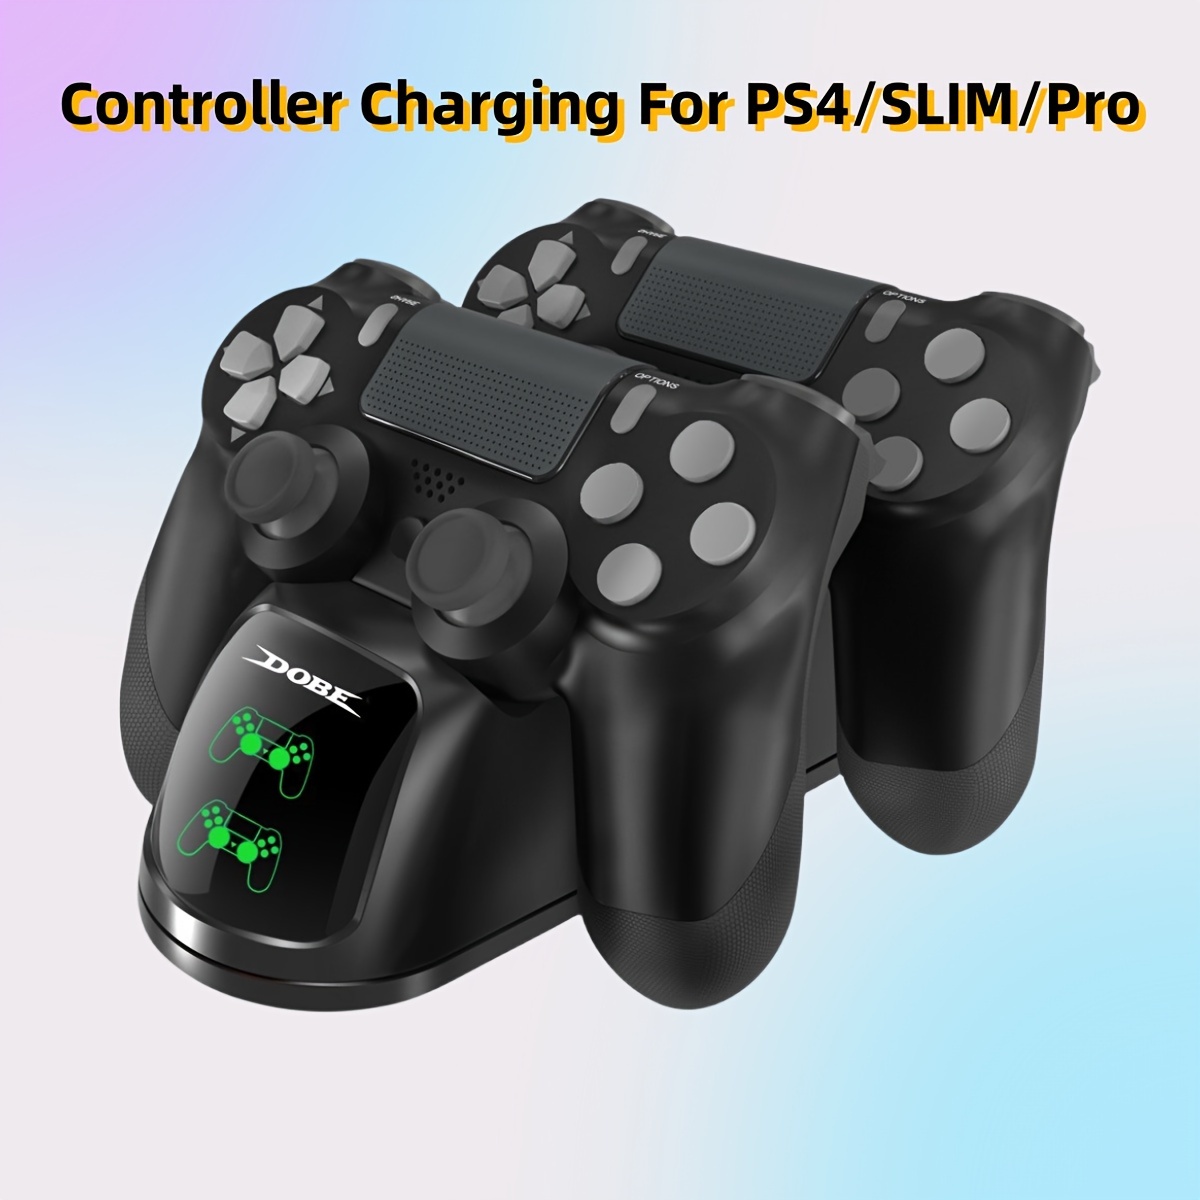 Cargador de controlador PS4, cargador PS4, estación de carga USB compatible  con Dualshock 4, puerto de carga rápida mejorado para controladores